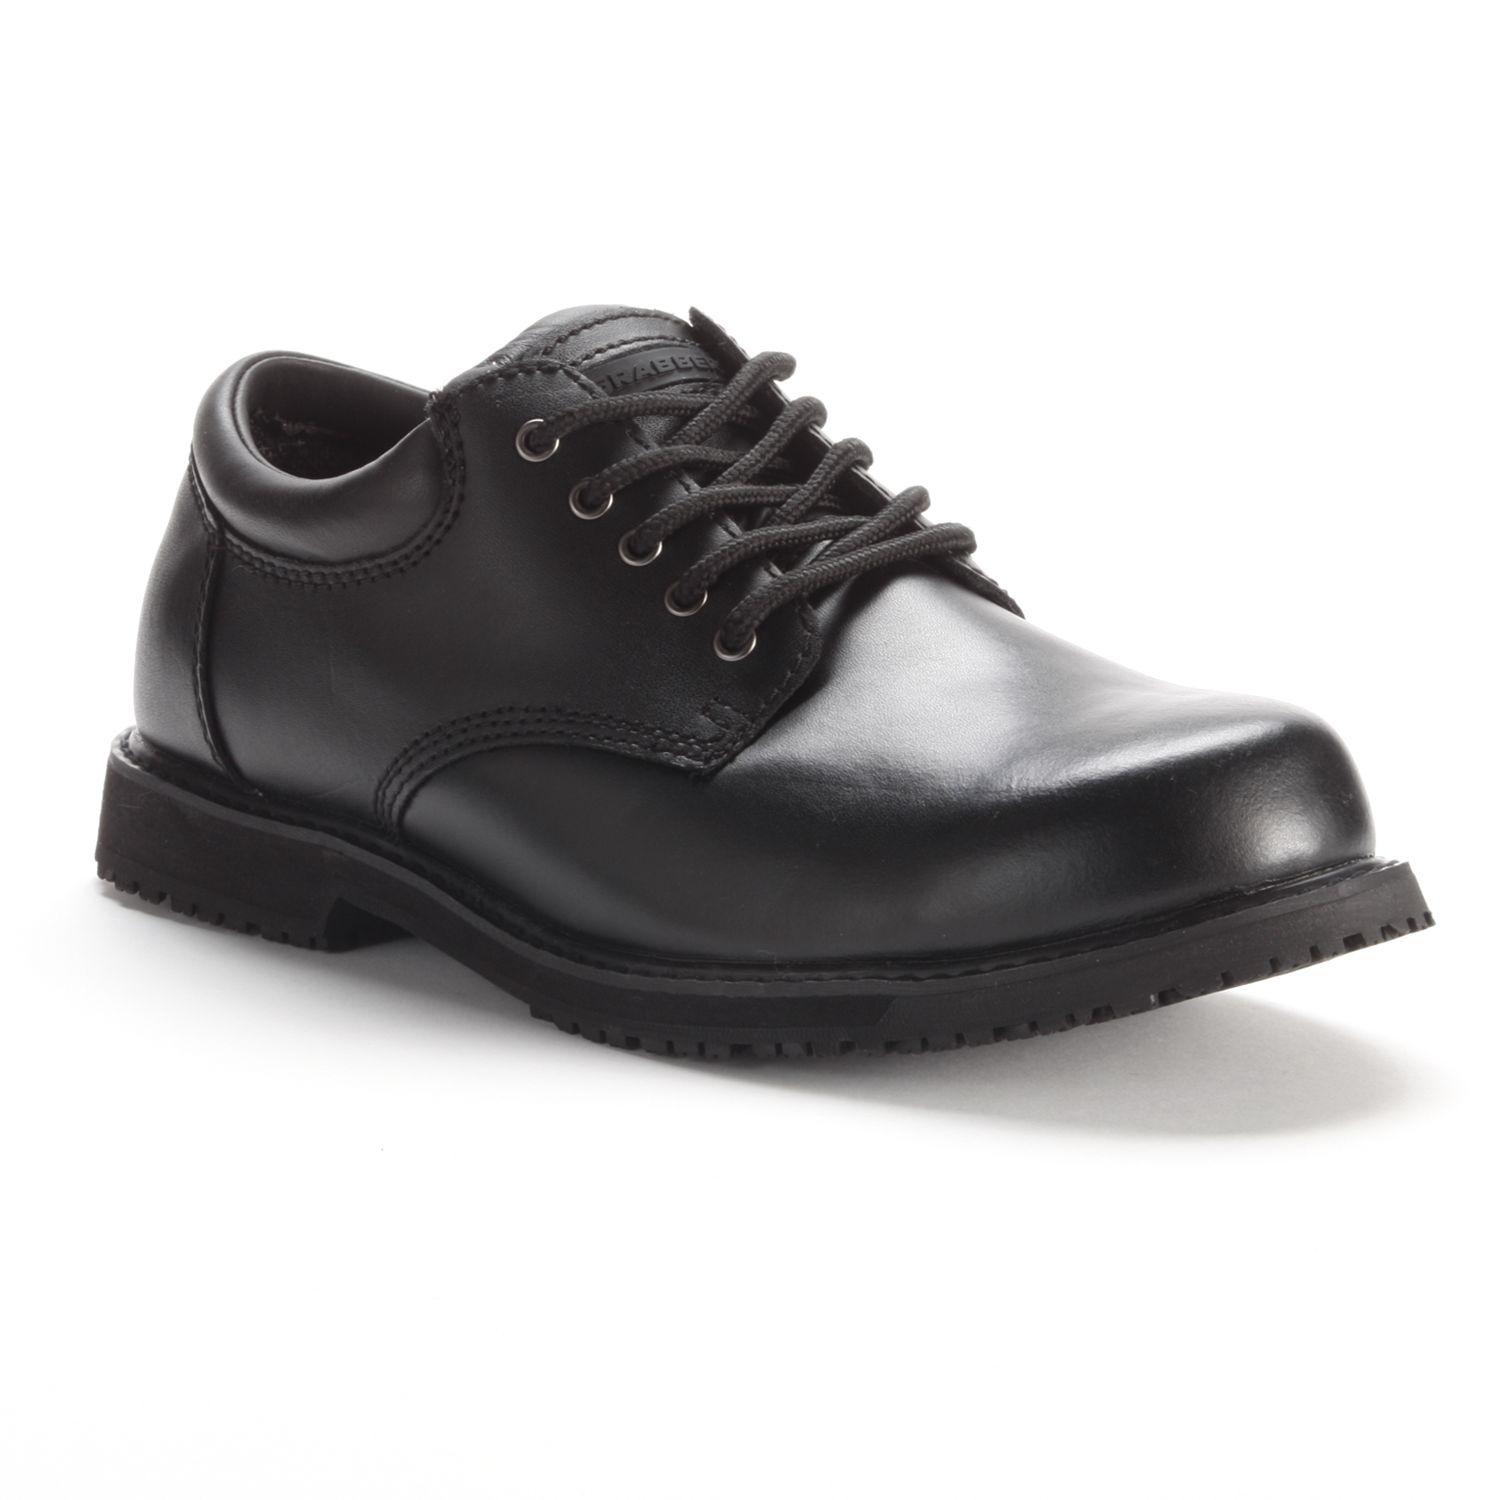 slip resistant oxford shoes